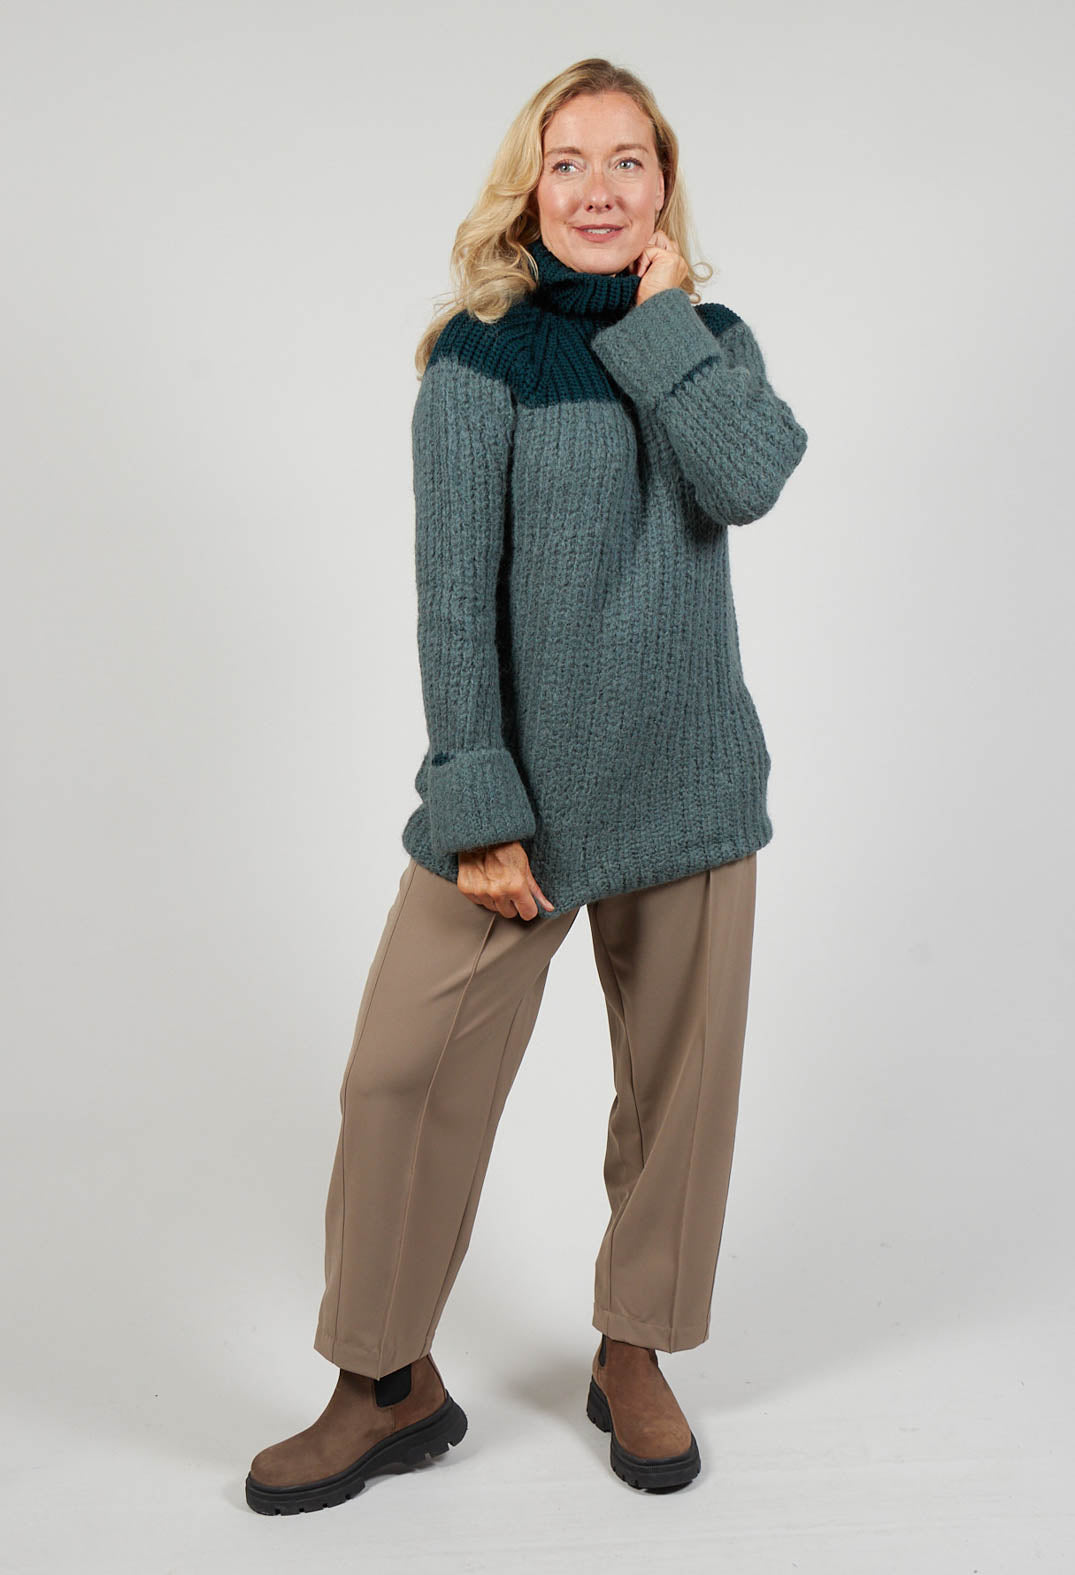 lady wearing a chunky knit jumper cypress green